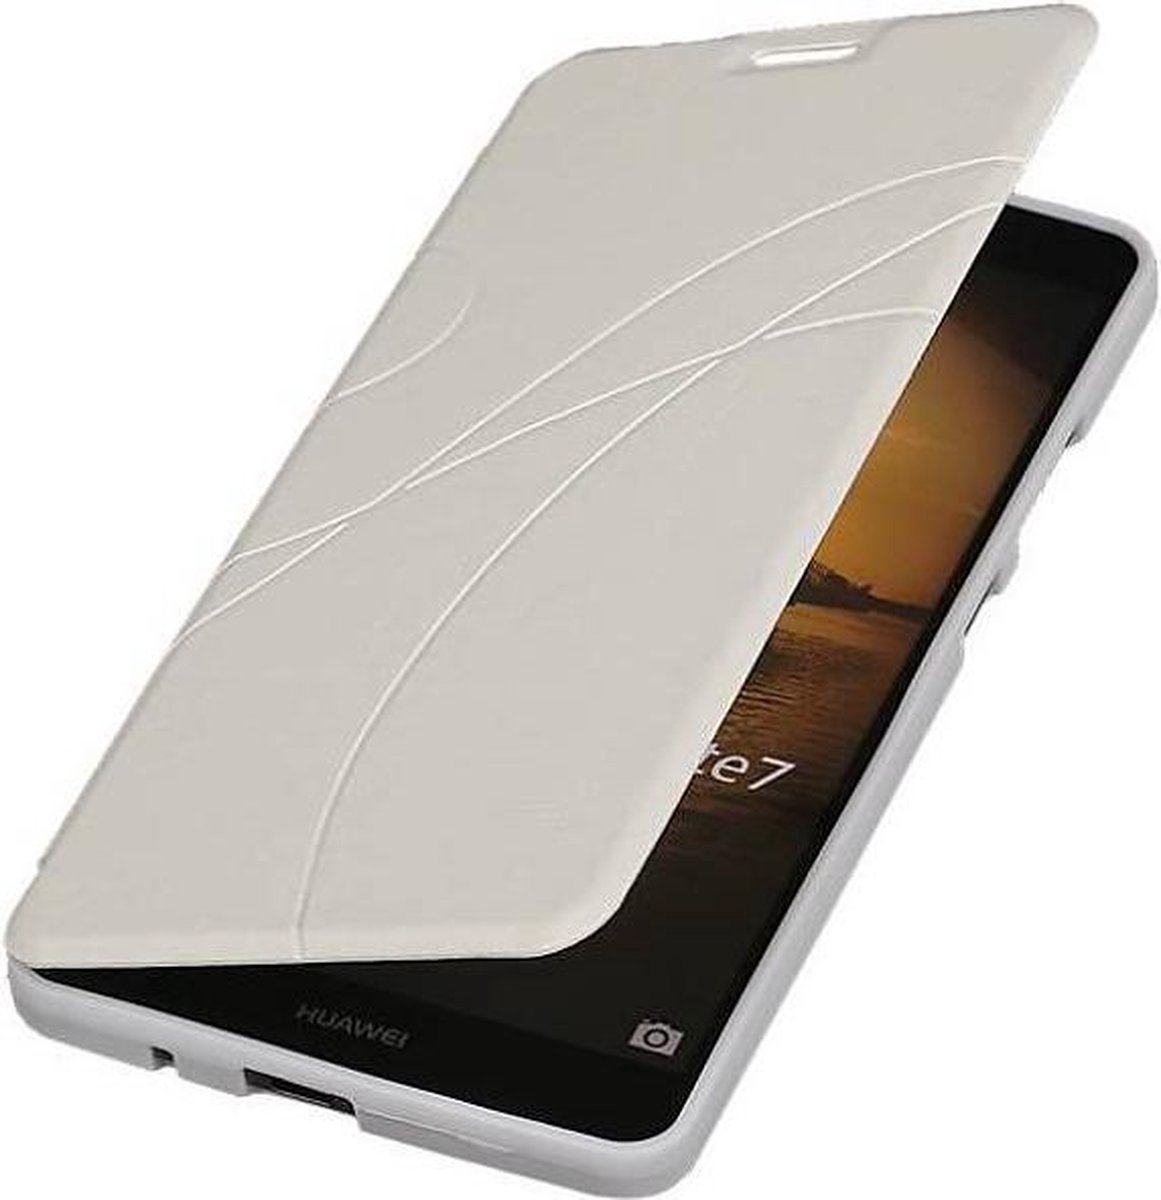 Minimaal aanwijzing Albany Easy TPU Booktype hoesje voor Huawei Ascend P6 Wit | bol.com